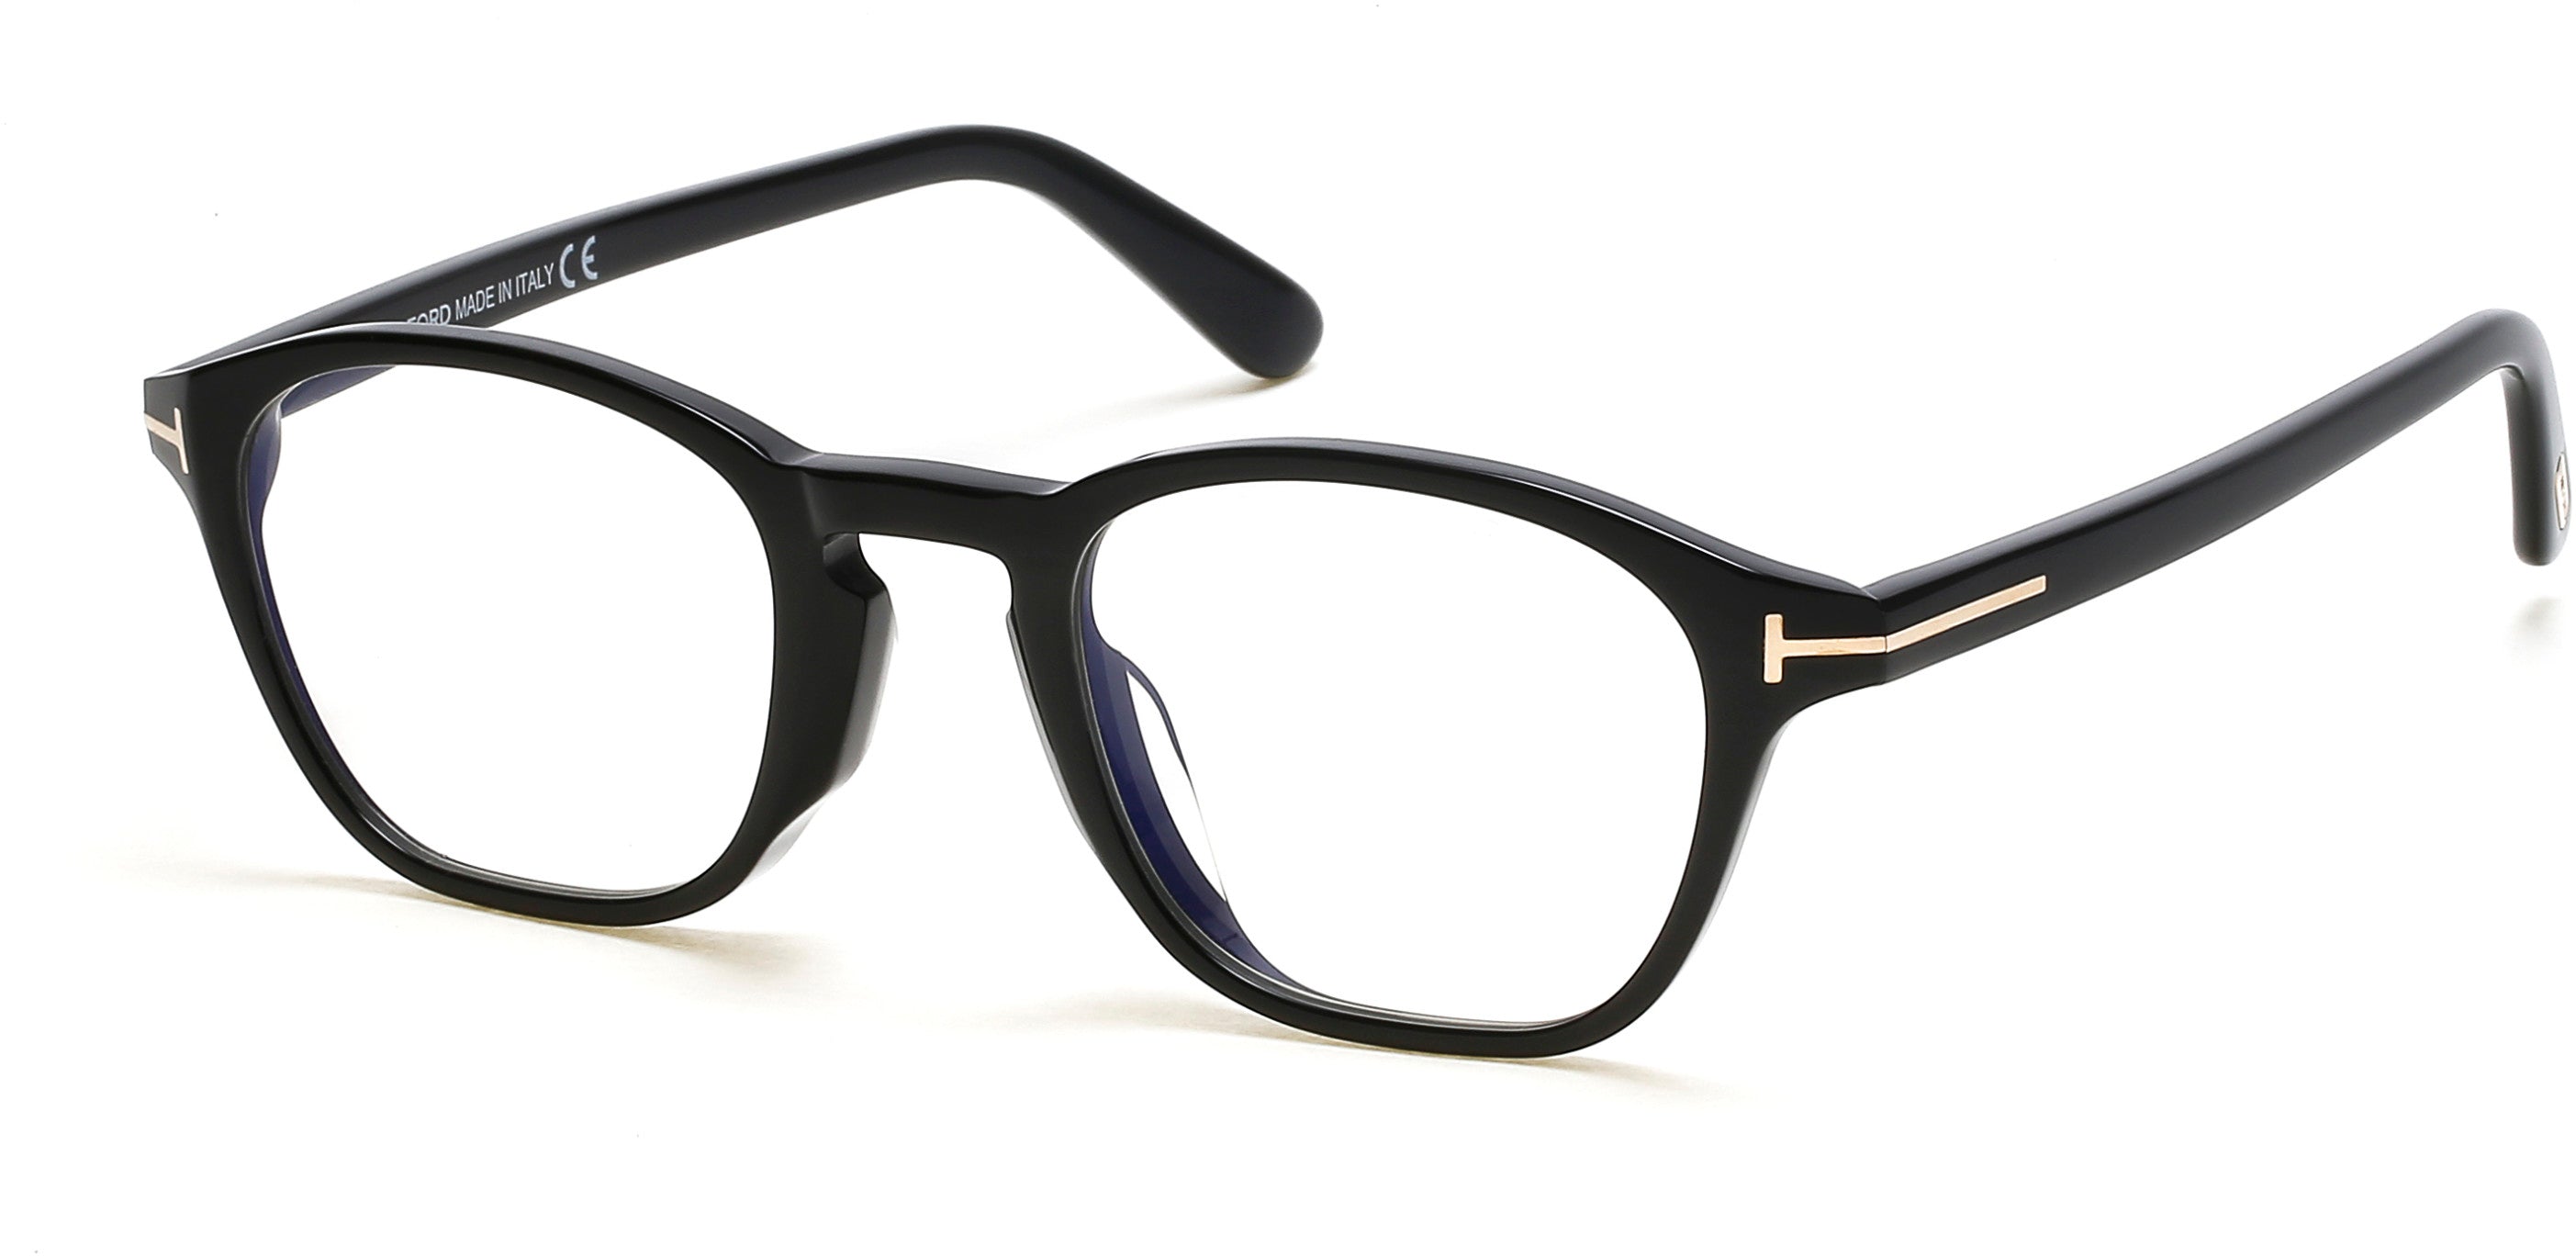 Tom Ford FT5591-D-B Geometric Eyeglasses 001-001 - Shiny Black, Rose Gold "t" Logo/ Blue Block Lenses